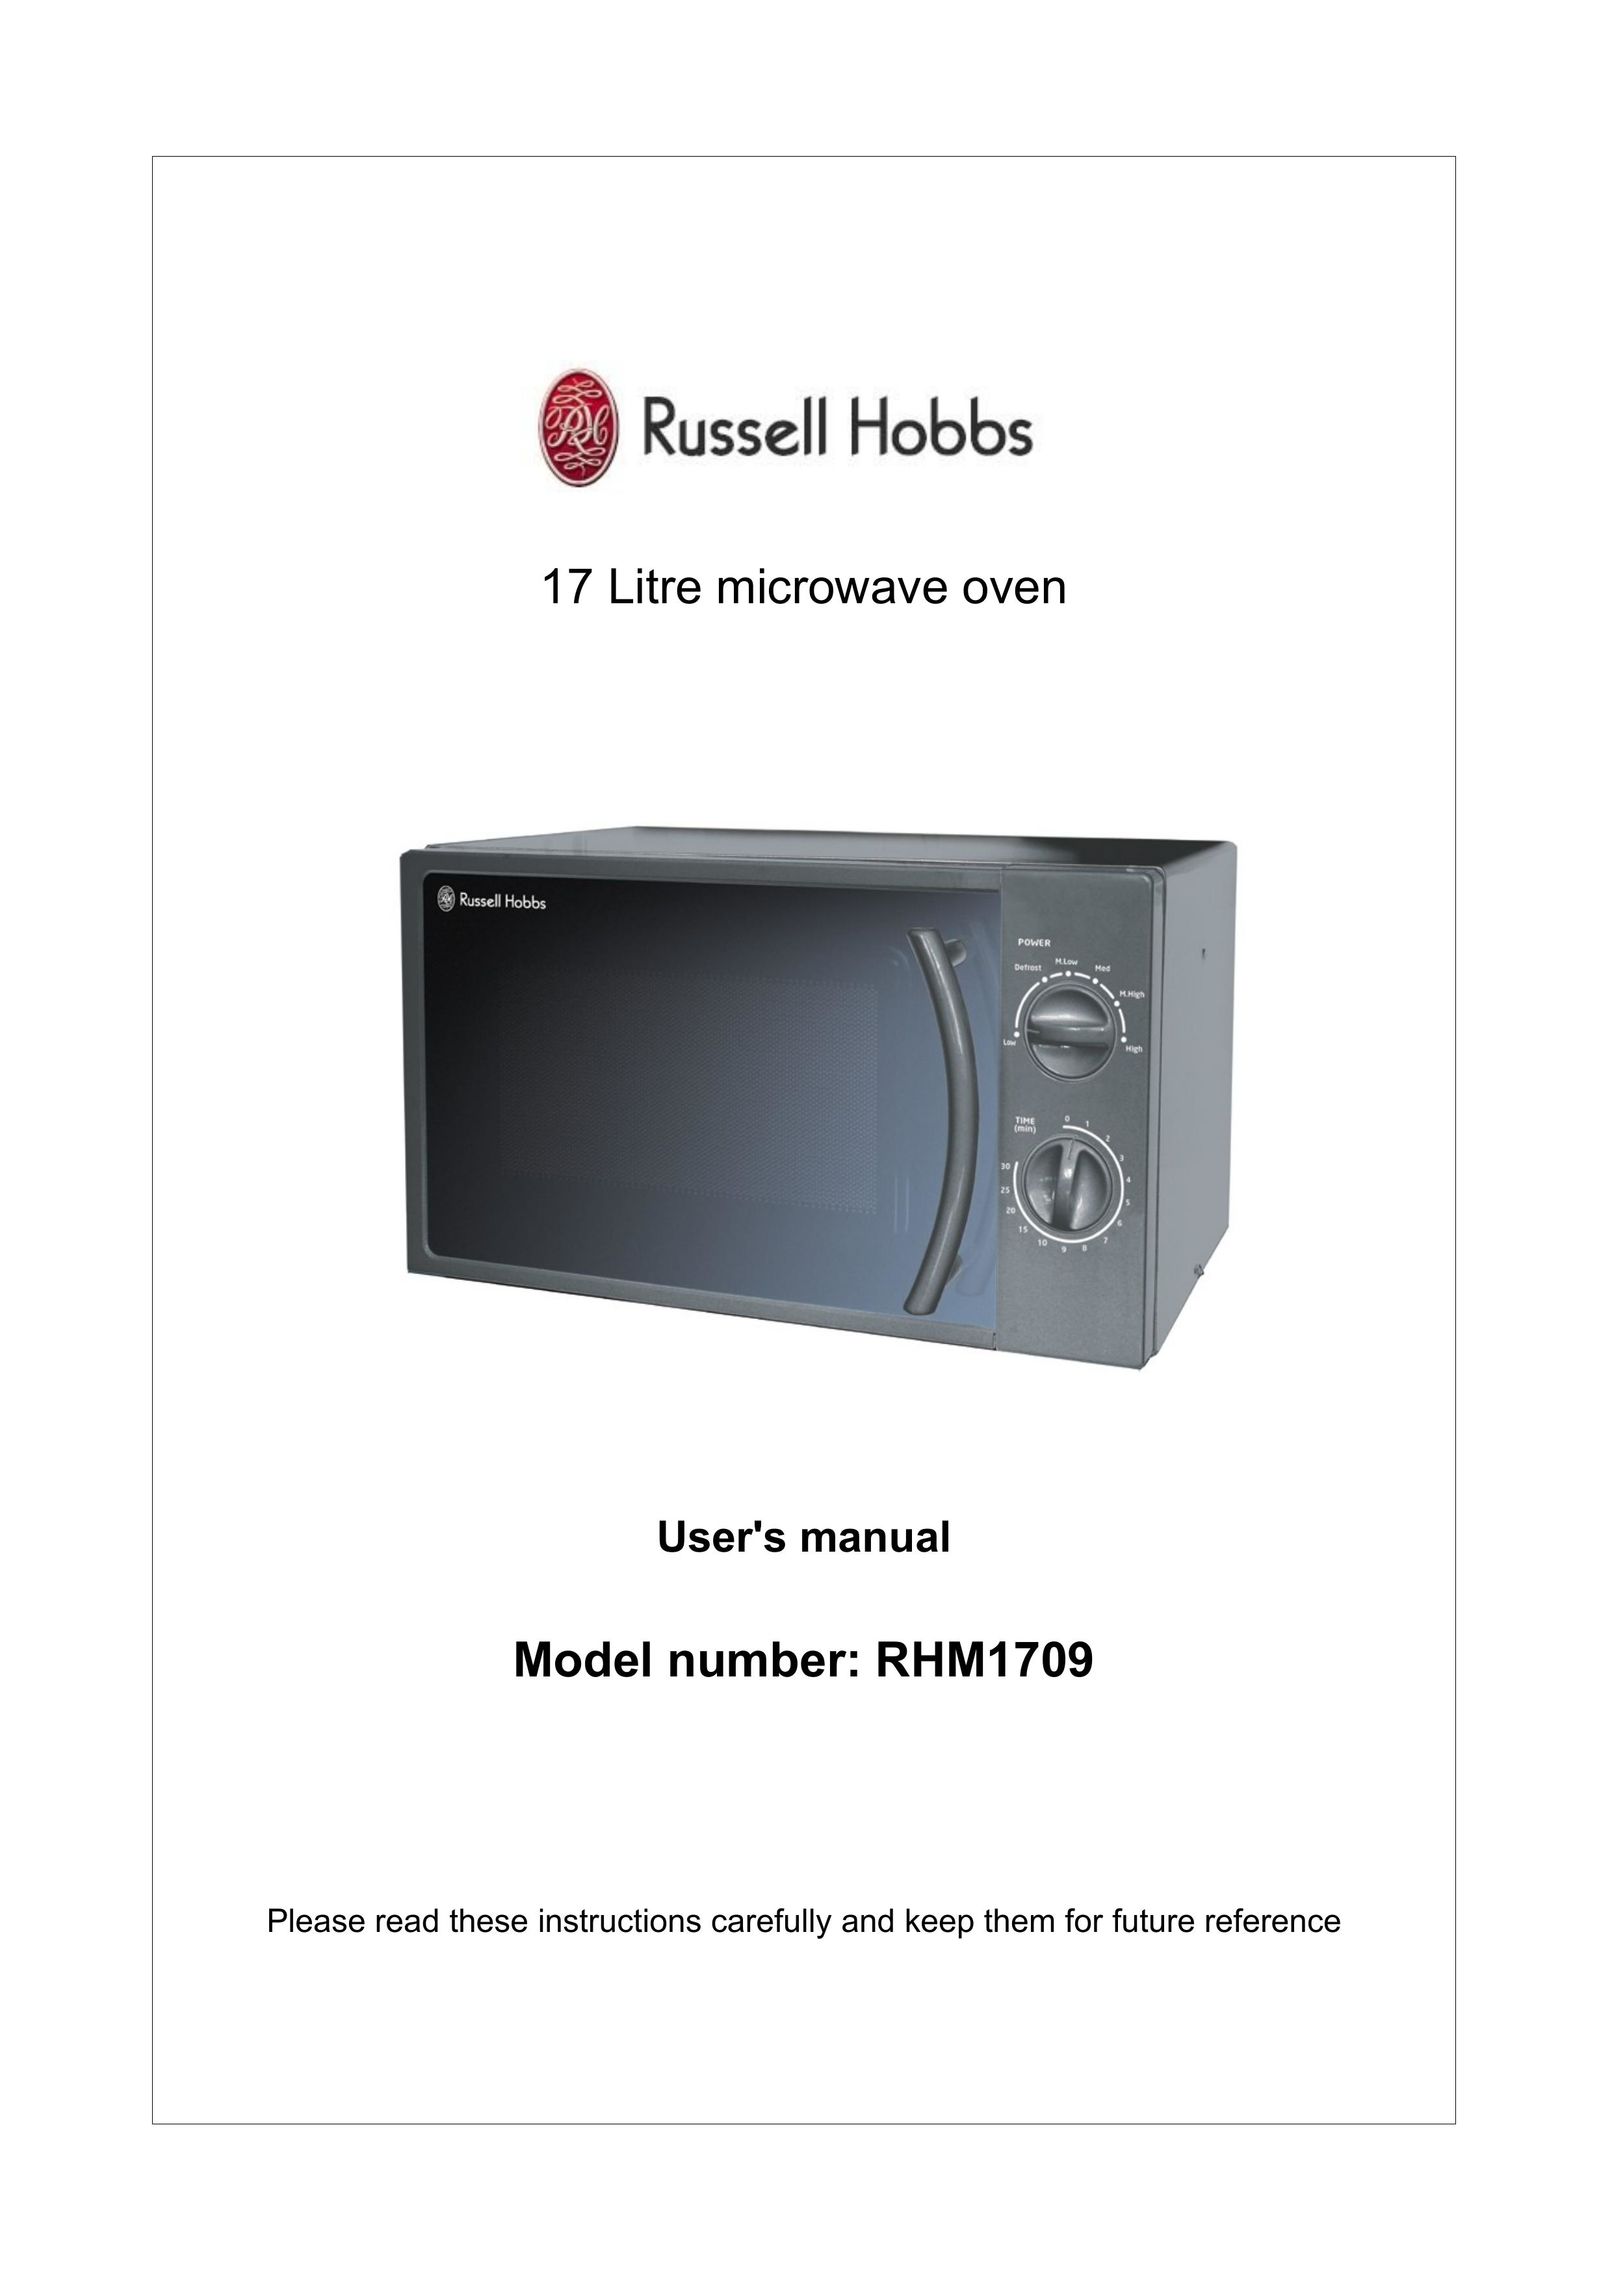 Russell Hobbs RHM1709 Microwave Oven User Manual